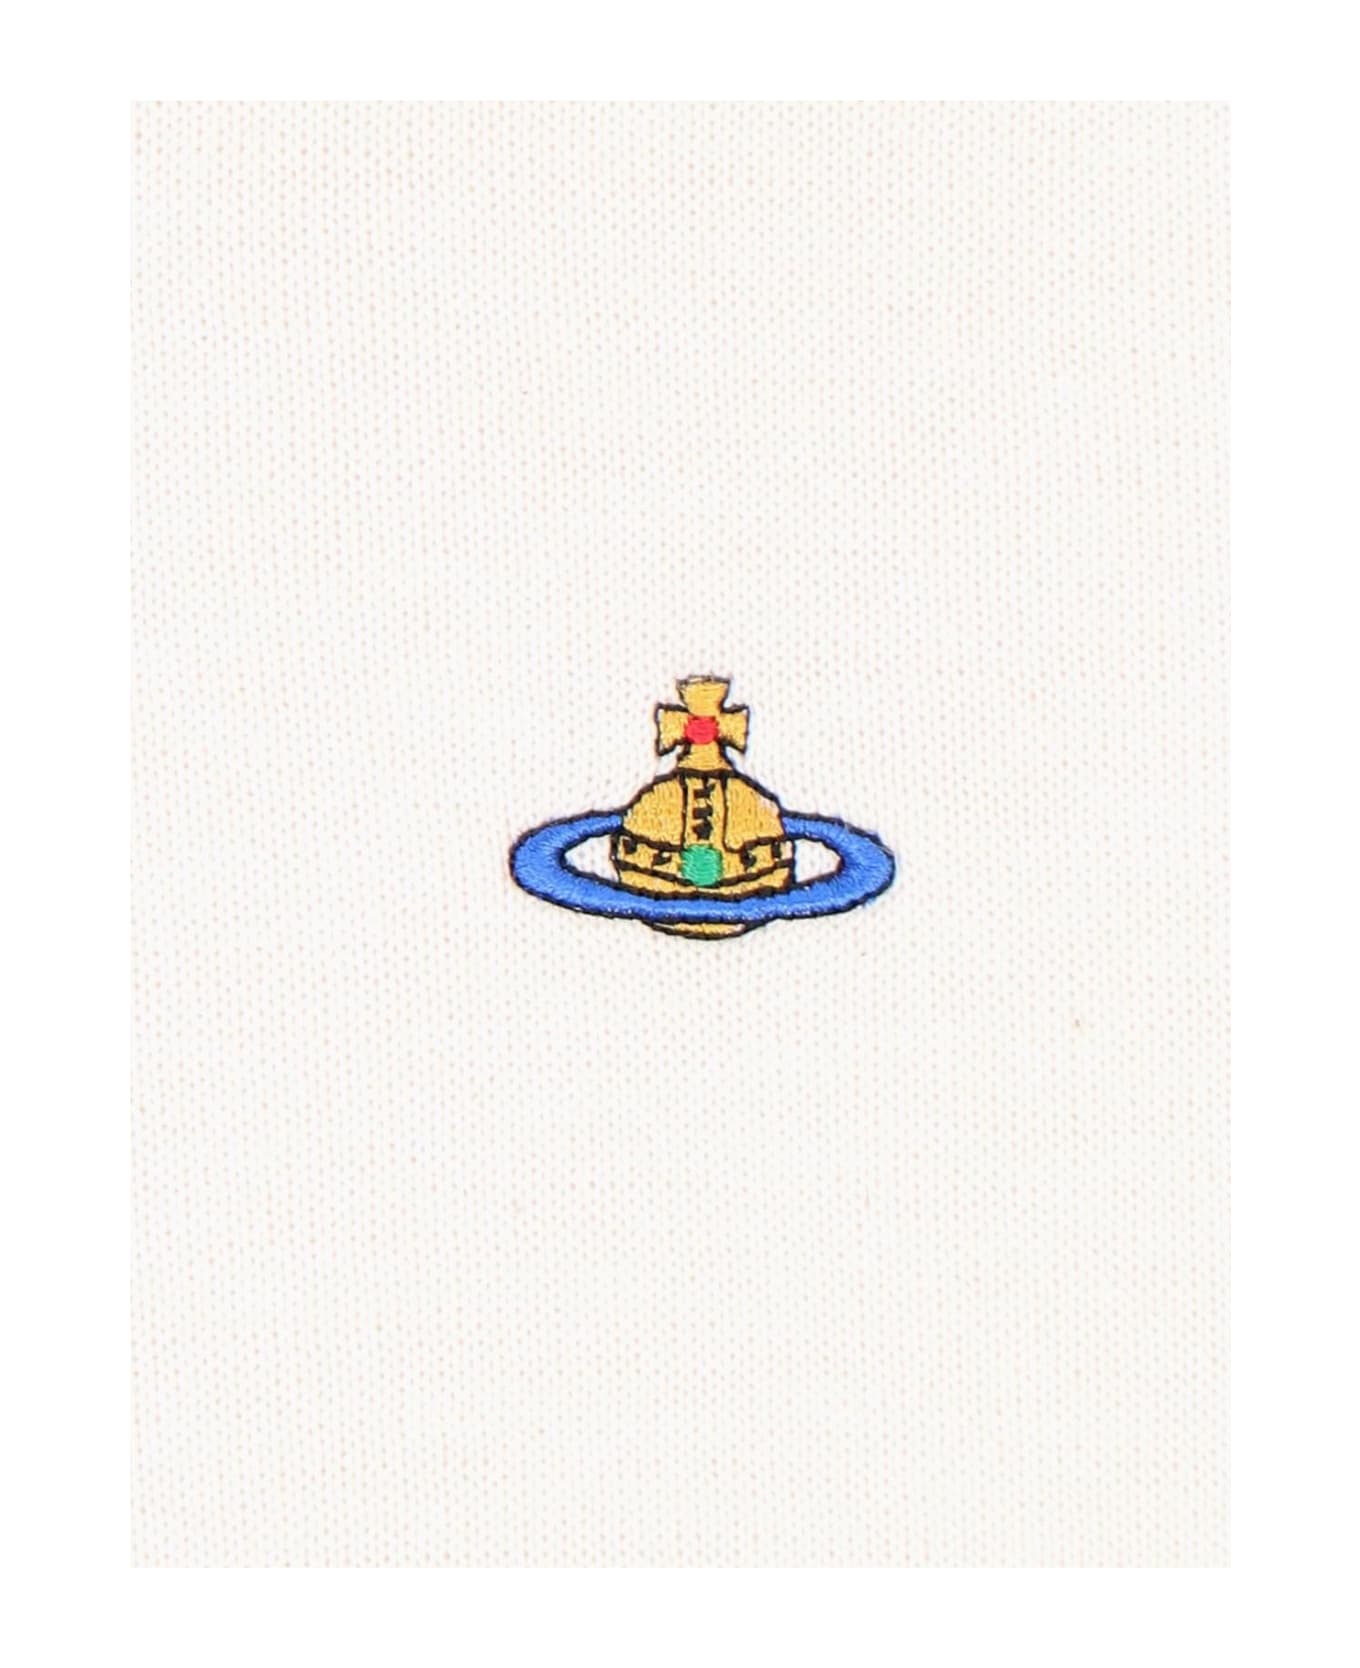 Vivienne Westwood Logo Sweater - Cream ニットウェア